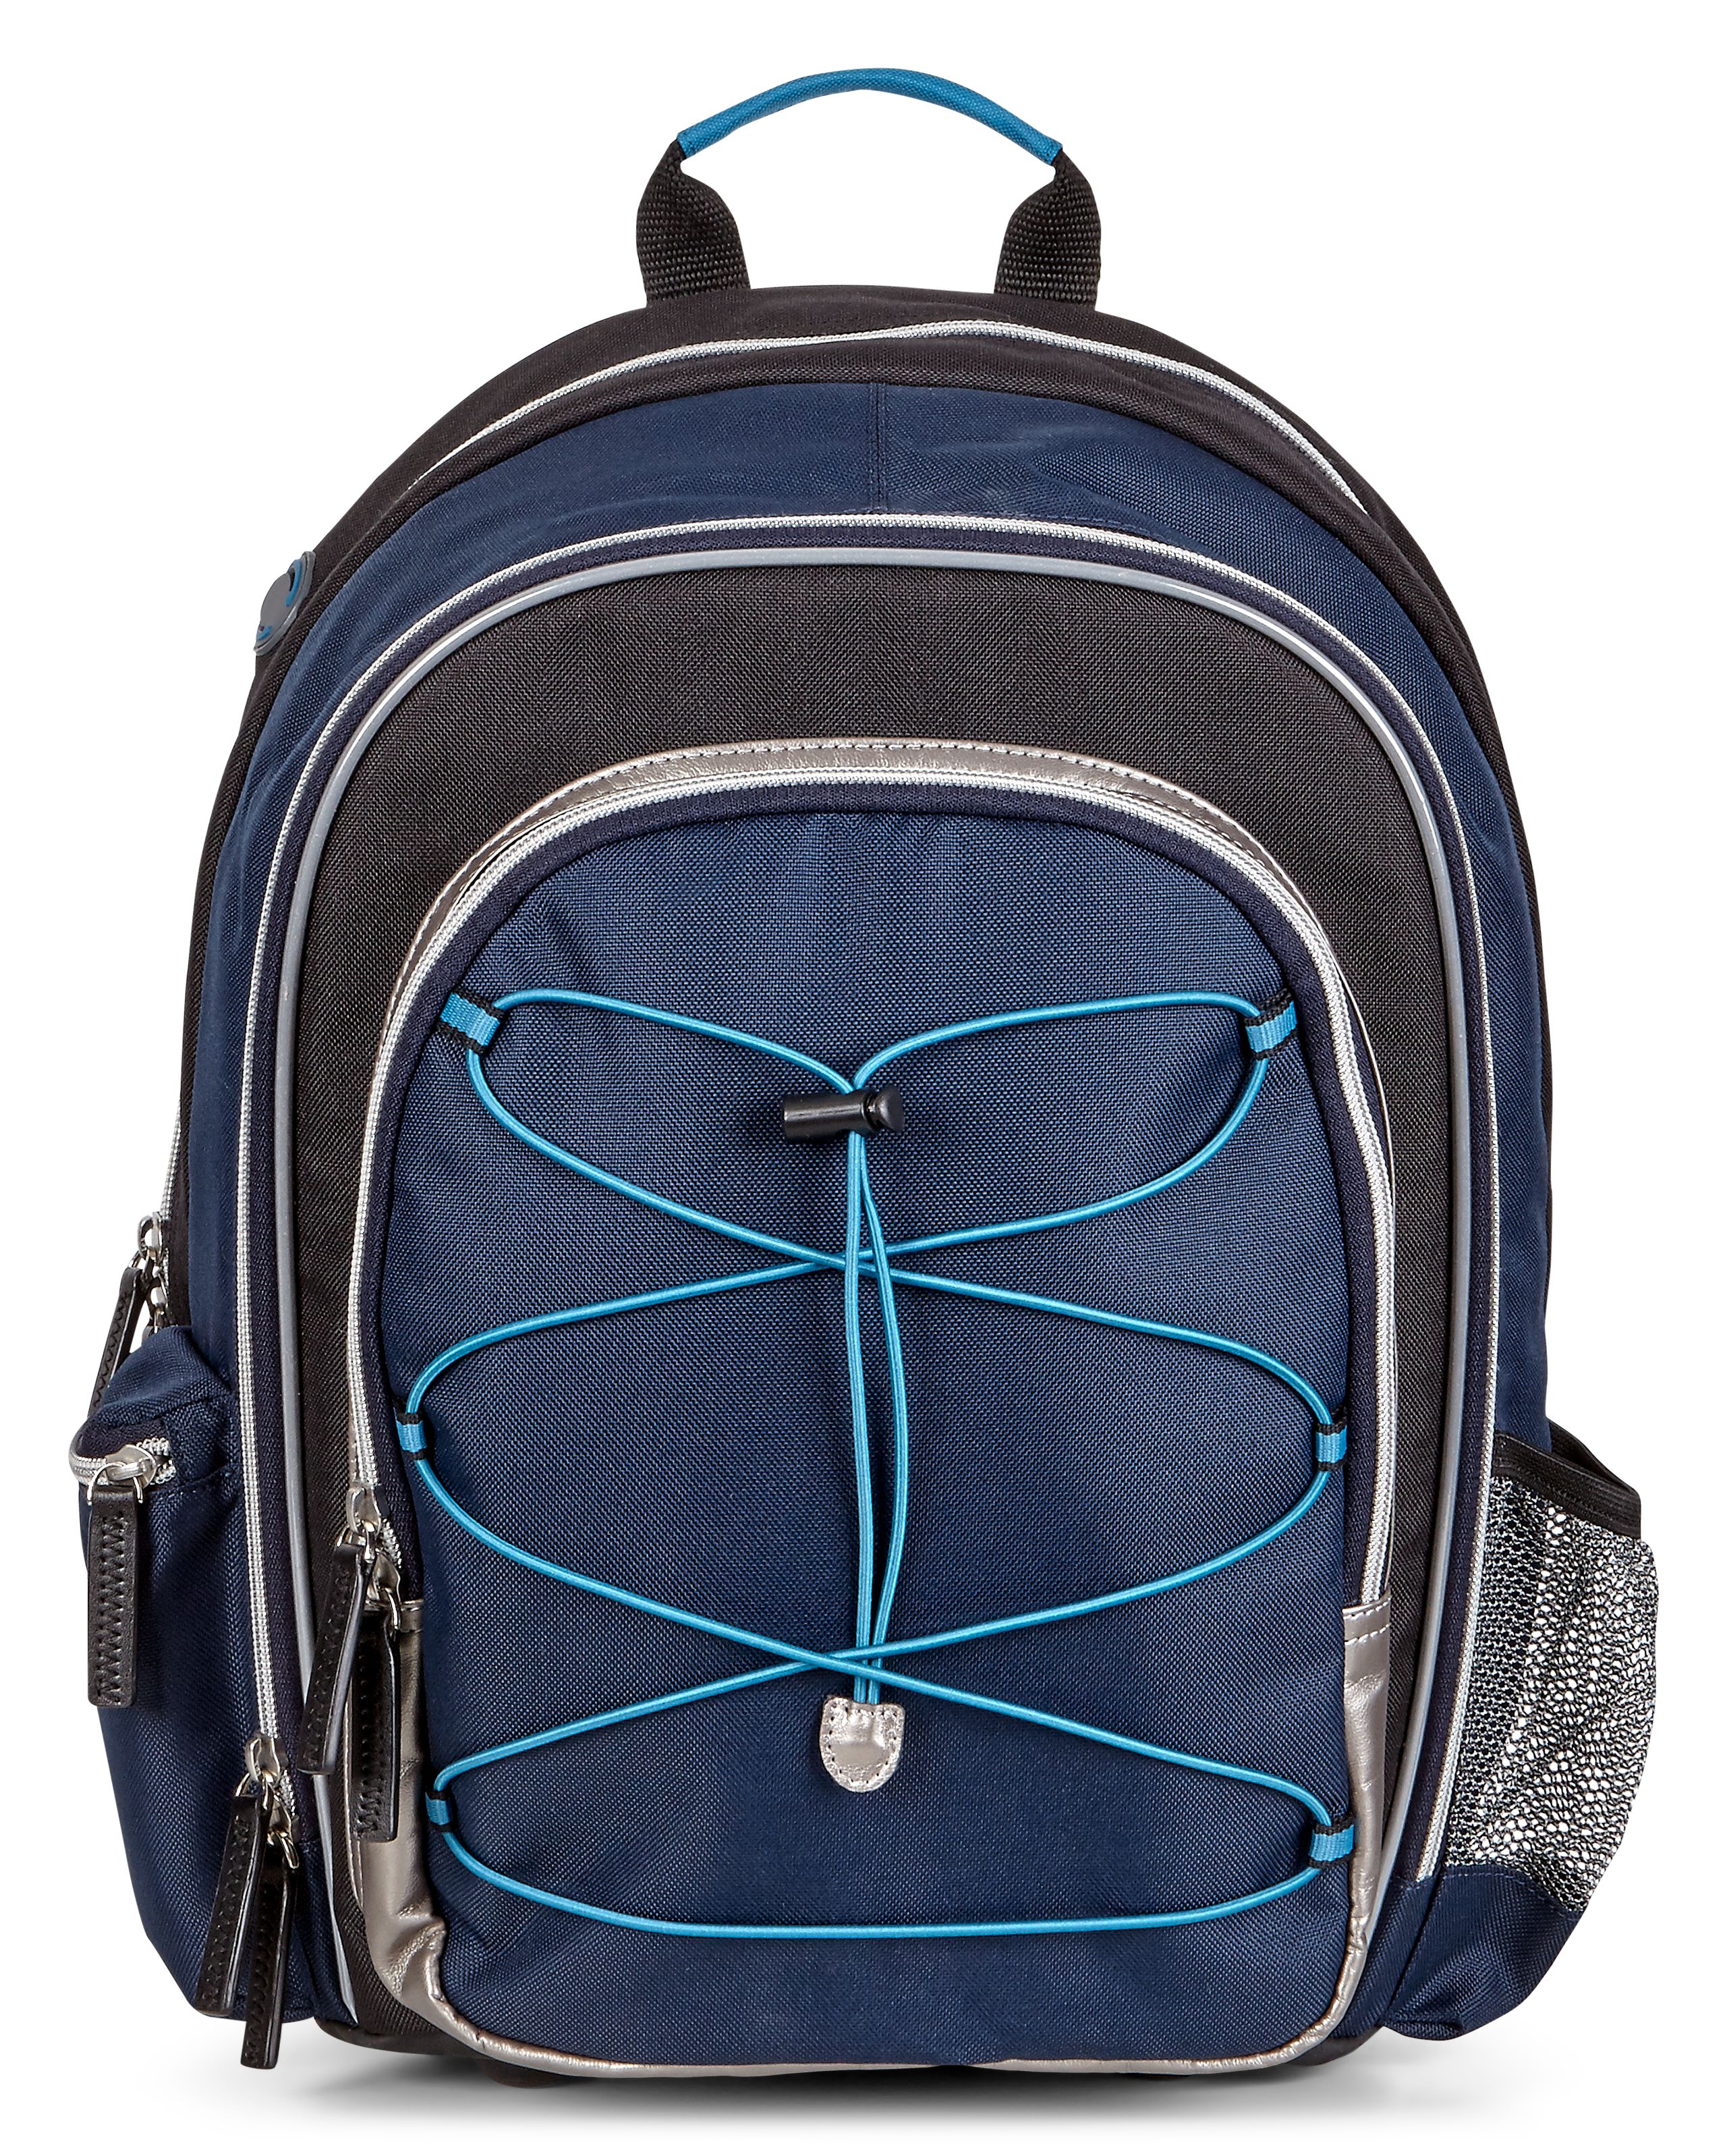 B2S Backpack 7-10yrs - ECCO.com